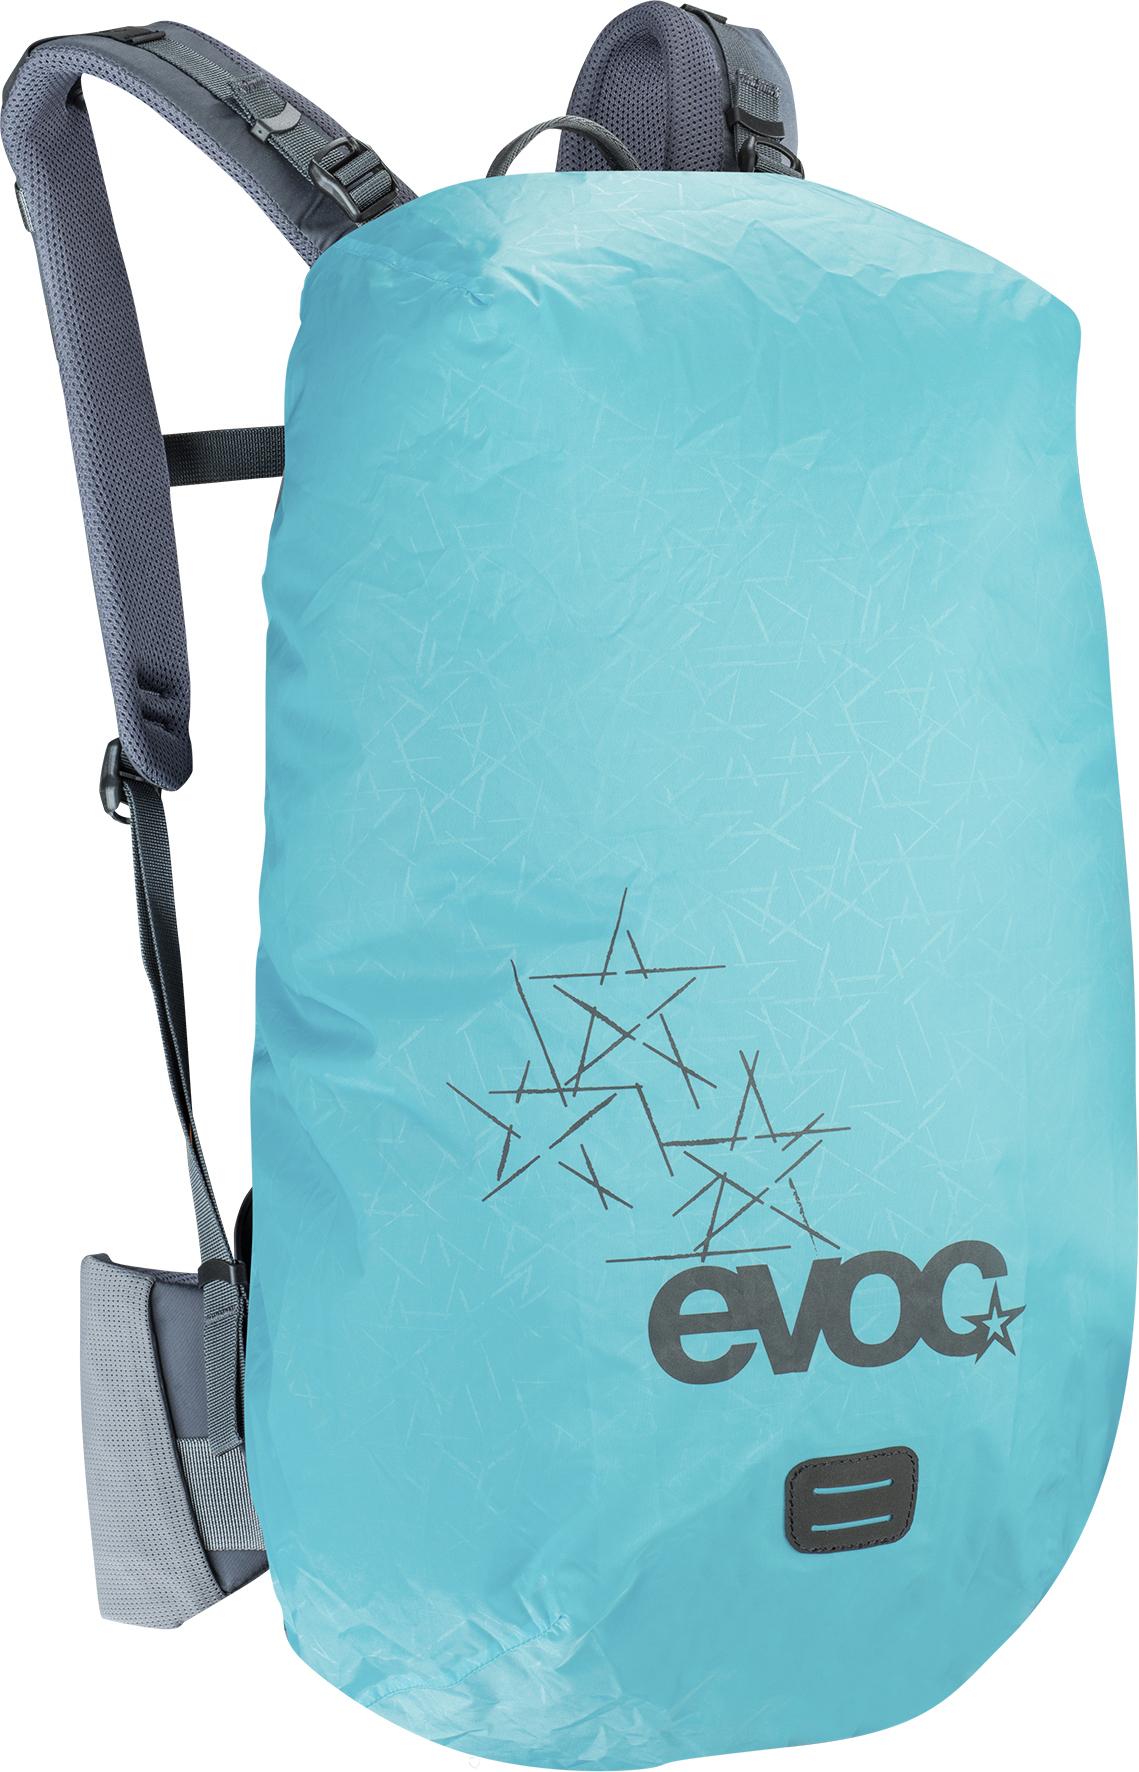 Evoc Raincover Backpack Sleeve - Large - Neon Blue